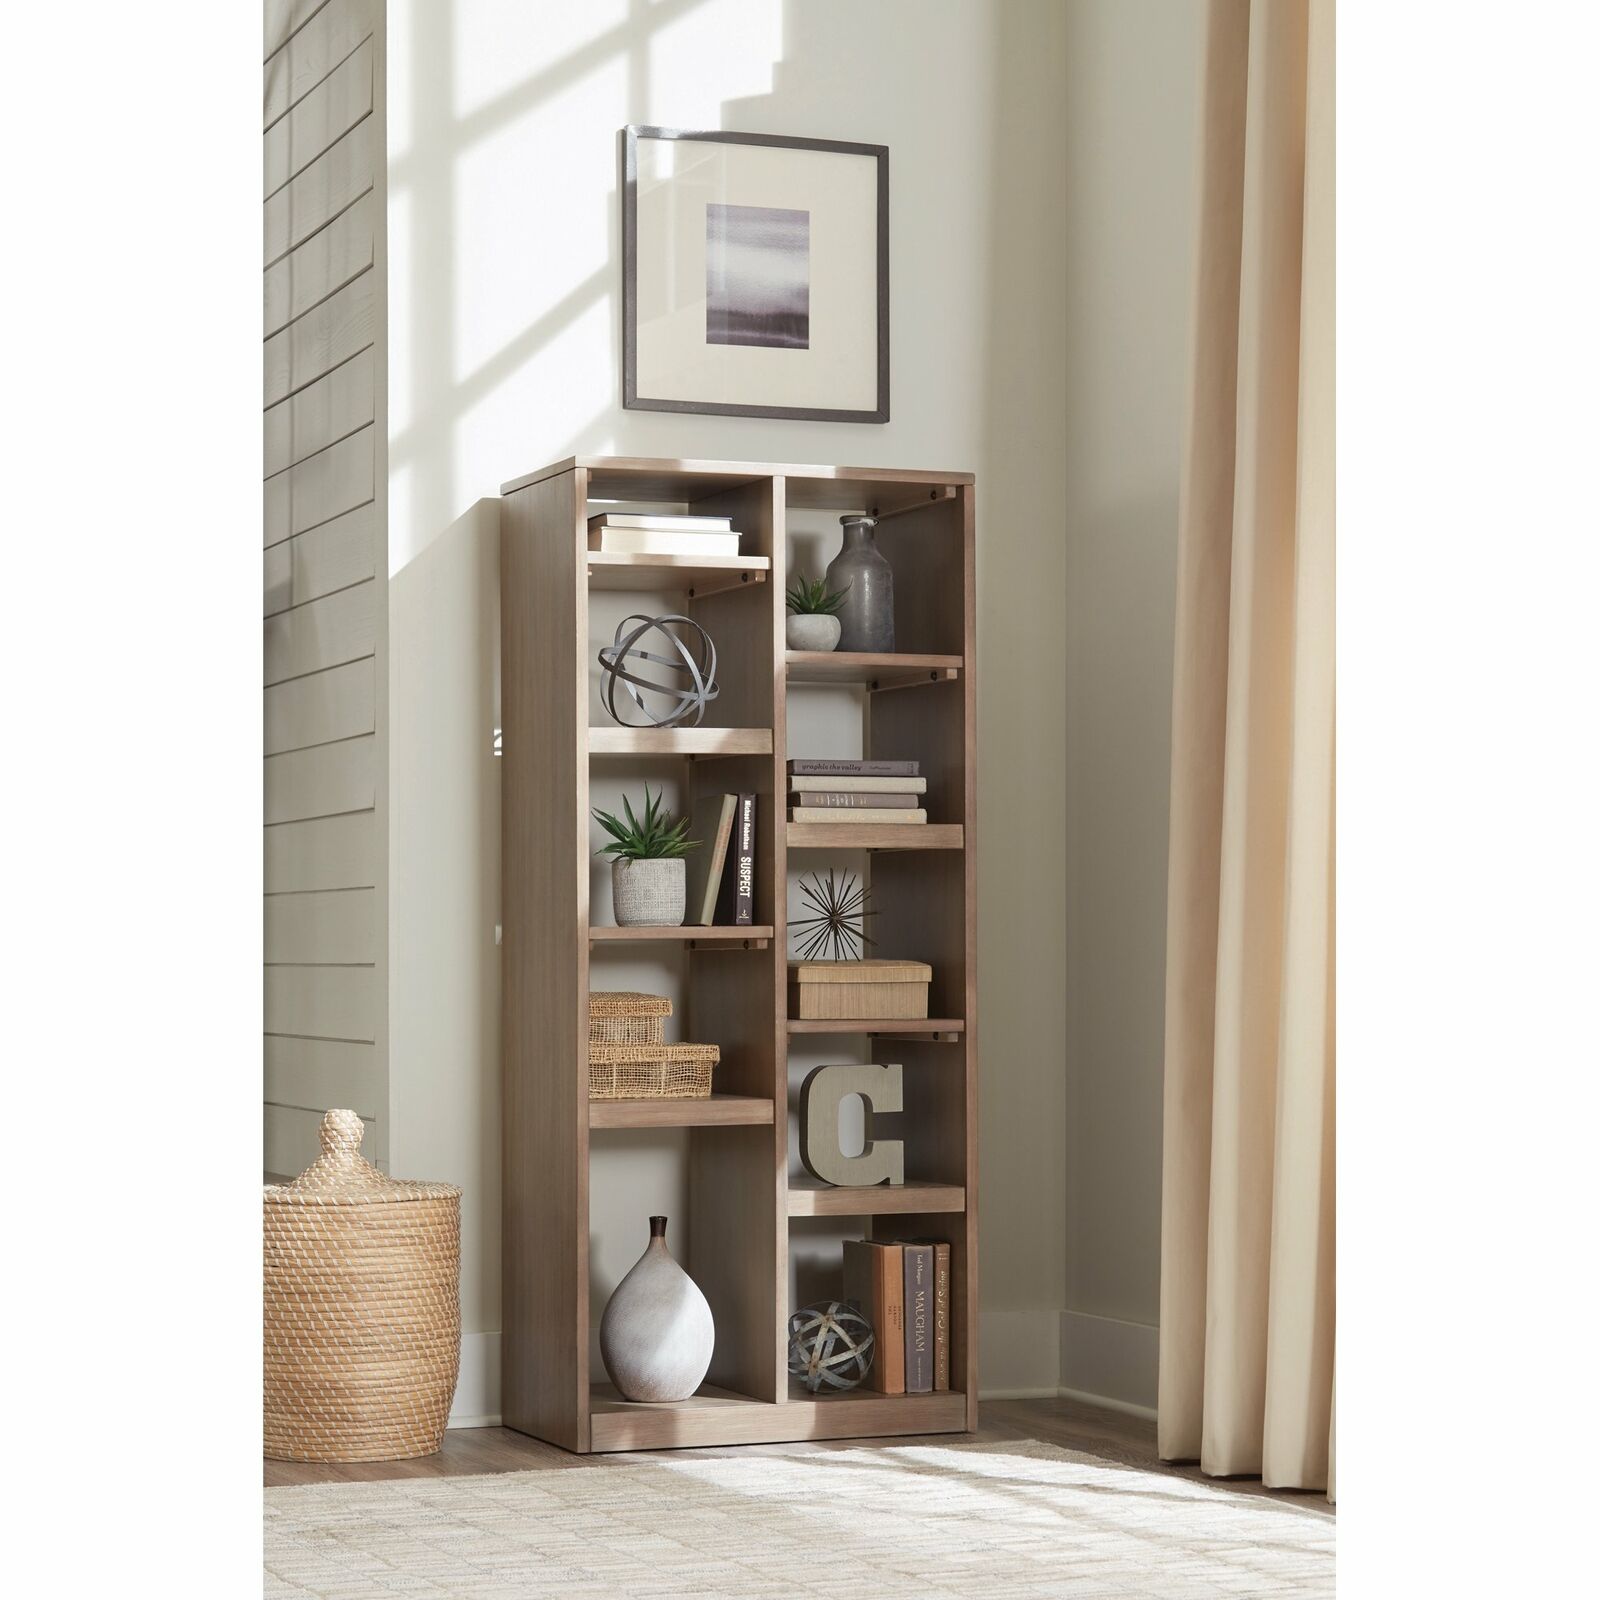 10-shelf Rectangular Etagere BookCase Display Shelf Sandstone